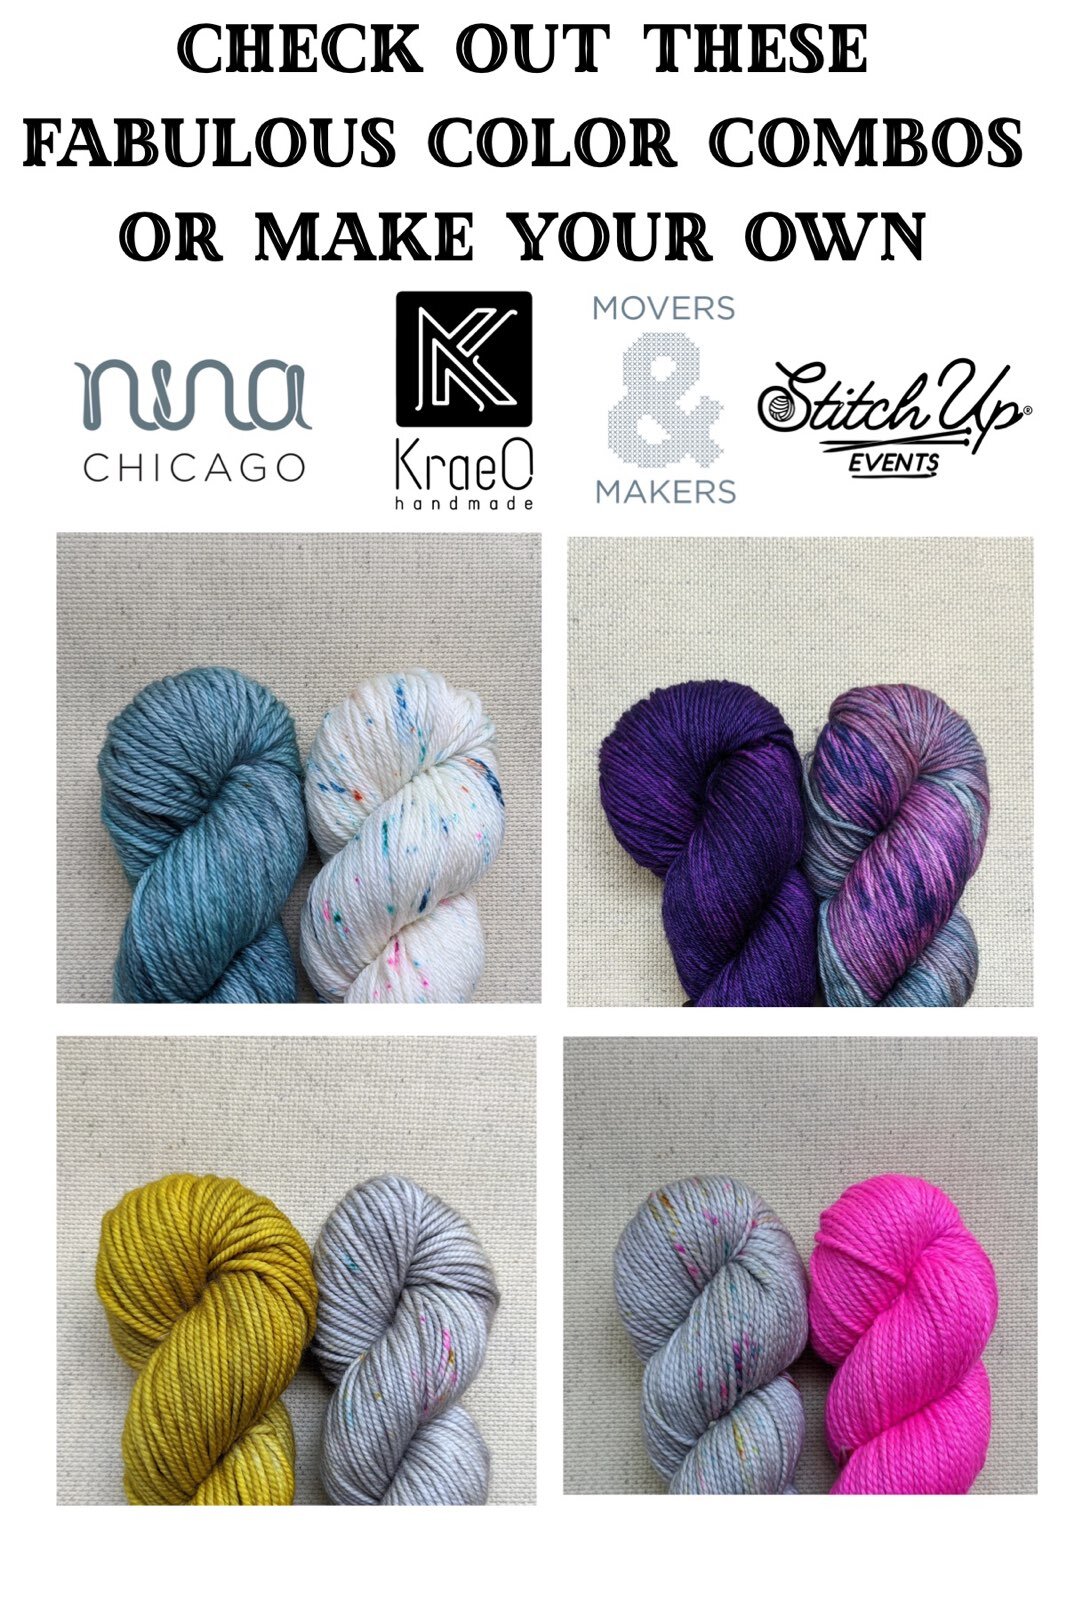 Knit Row Counter - Nina Chicago